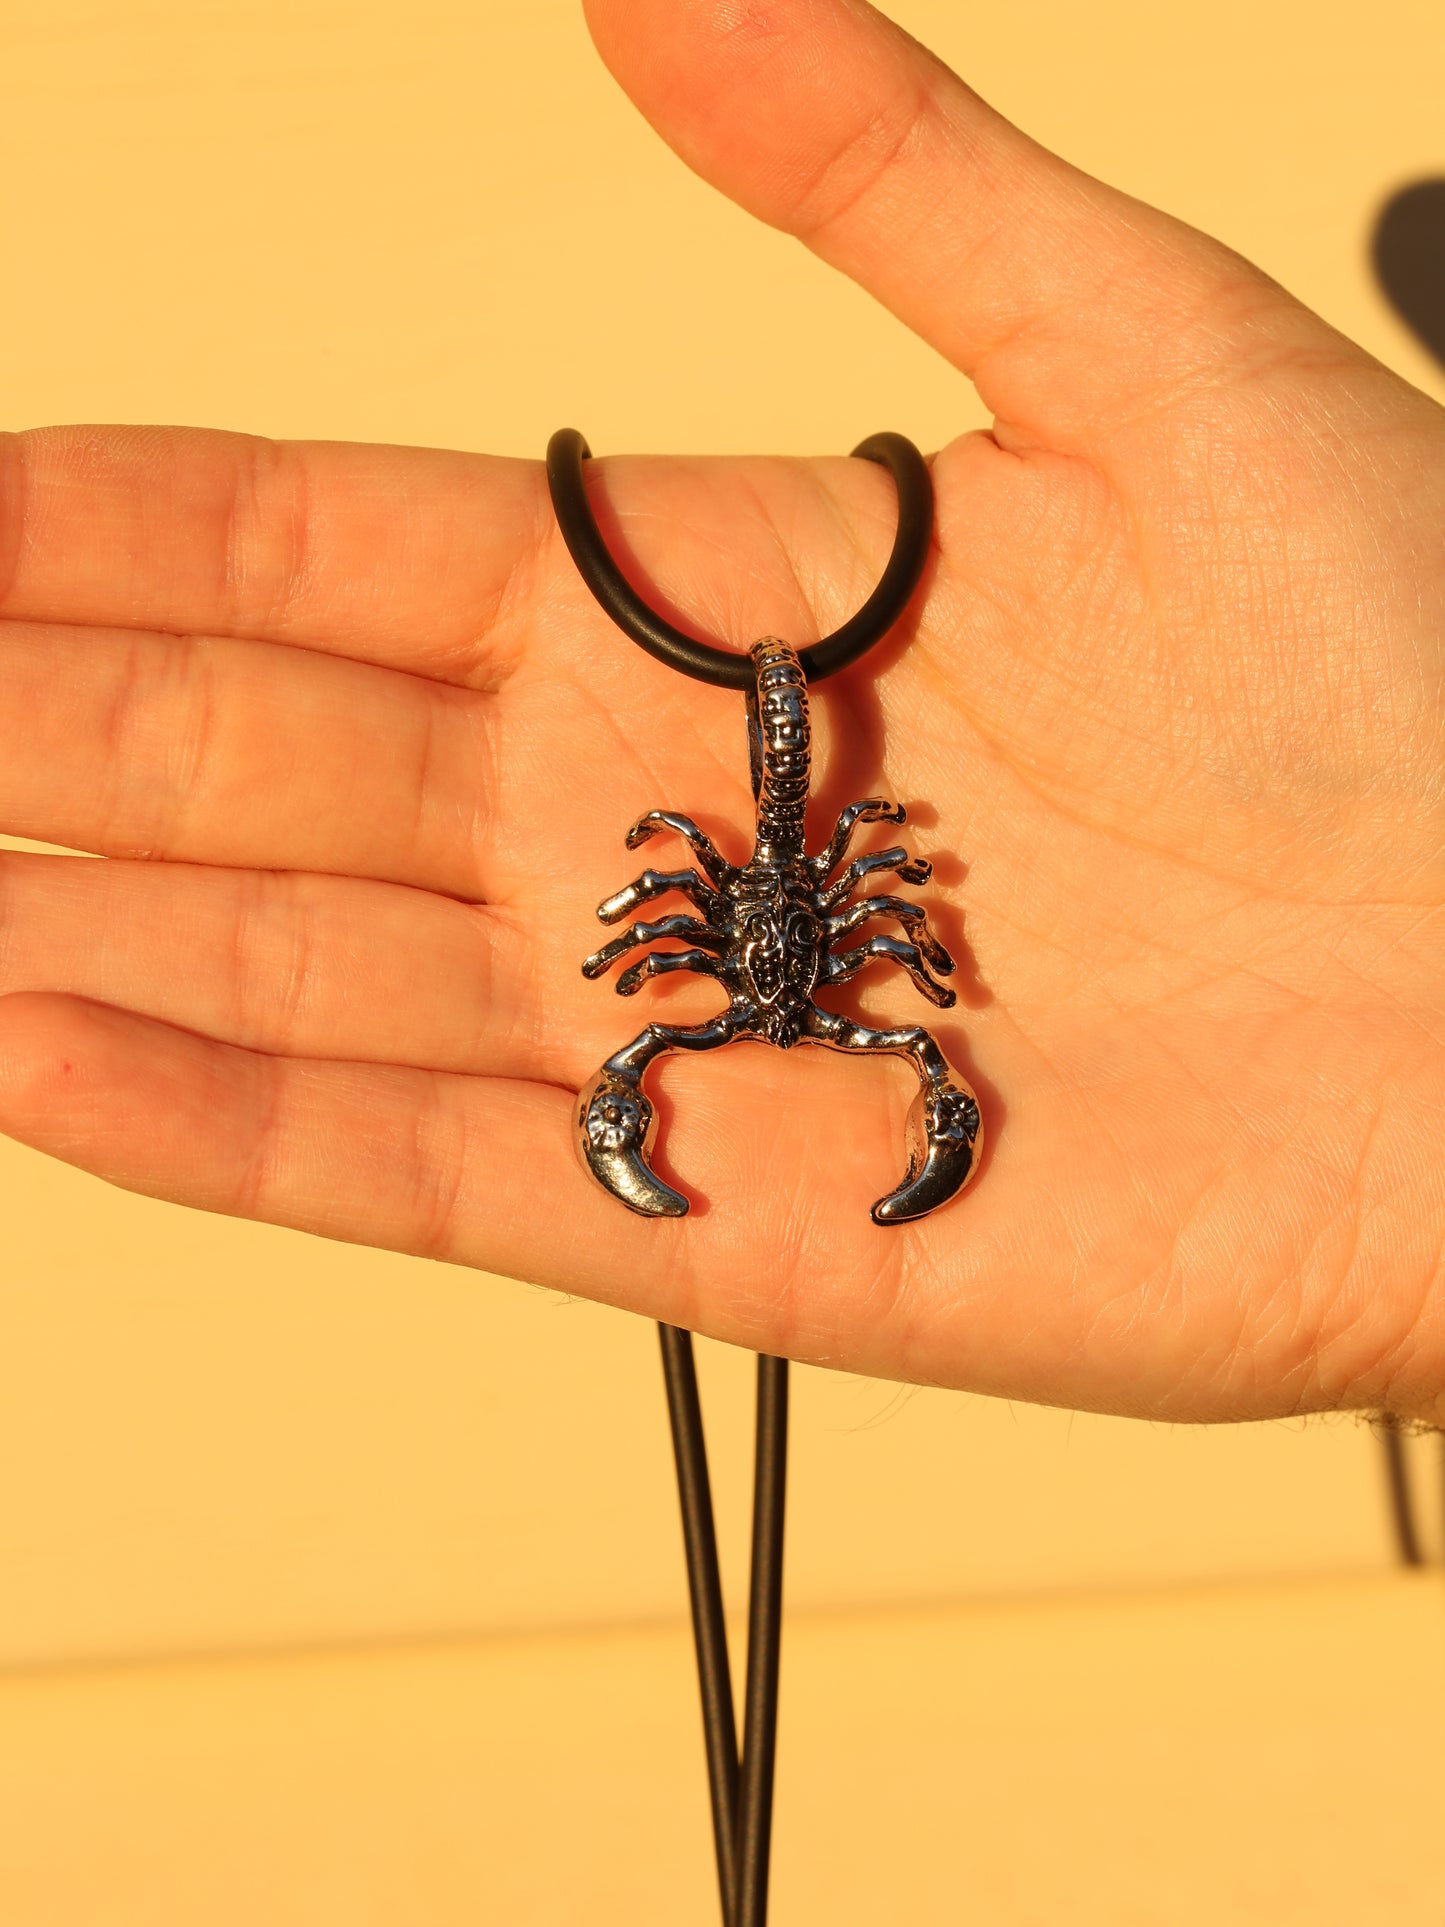 Scorpion necklace